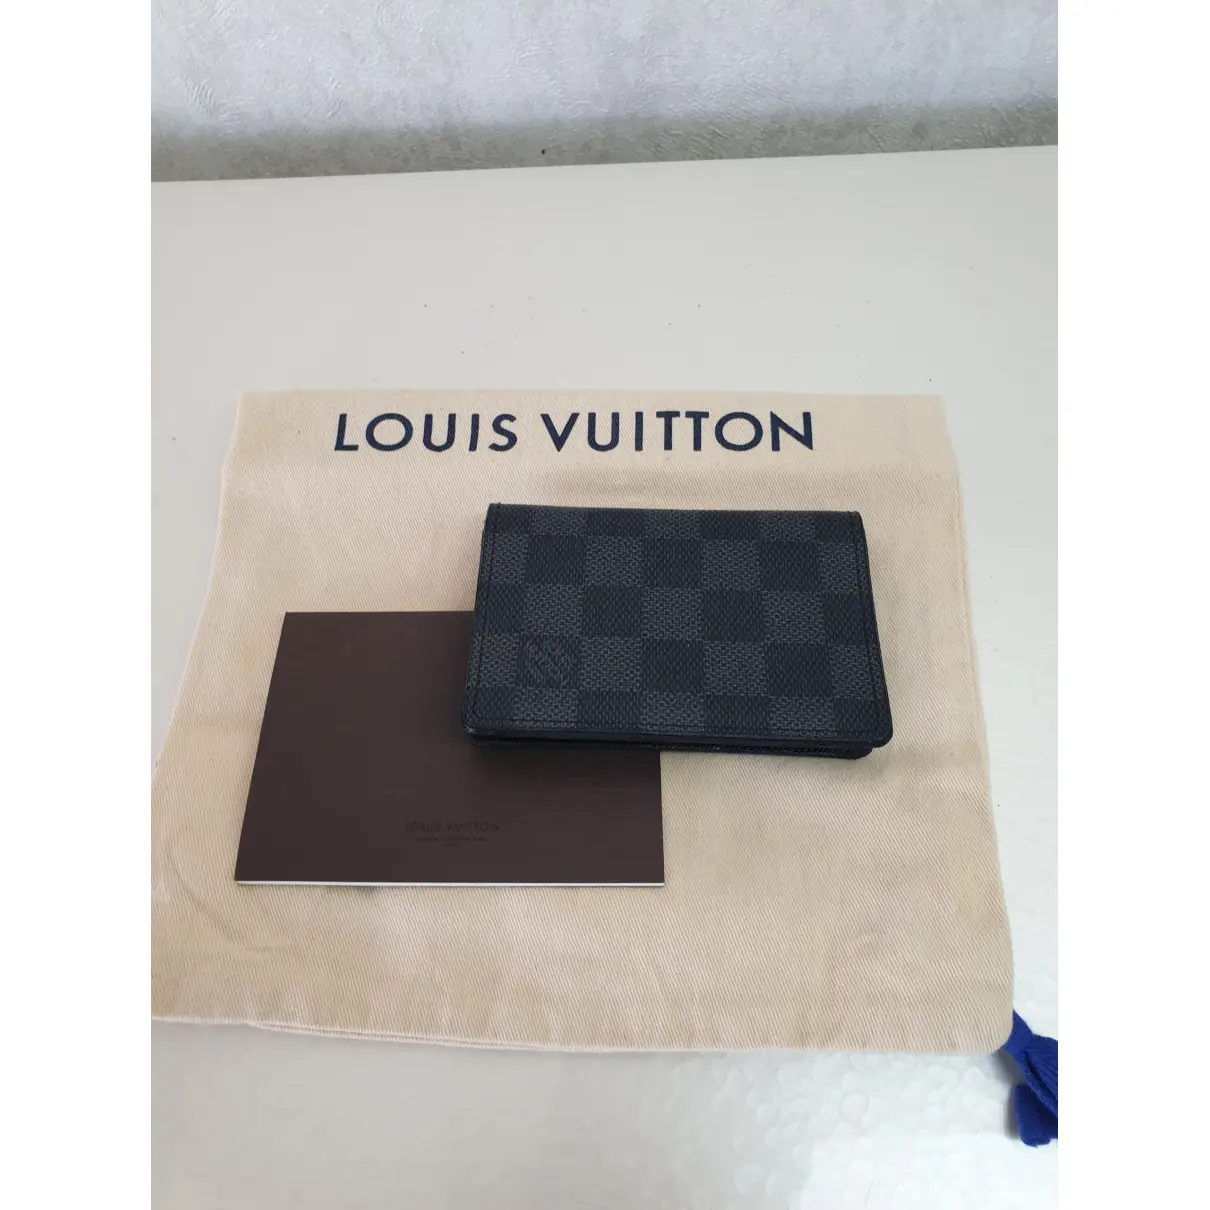 Buy Louis Vuitton Cloth card wallet online